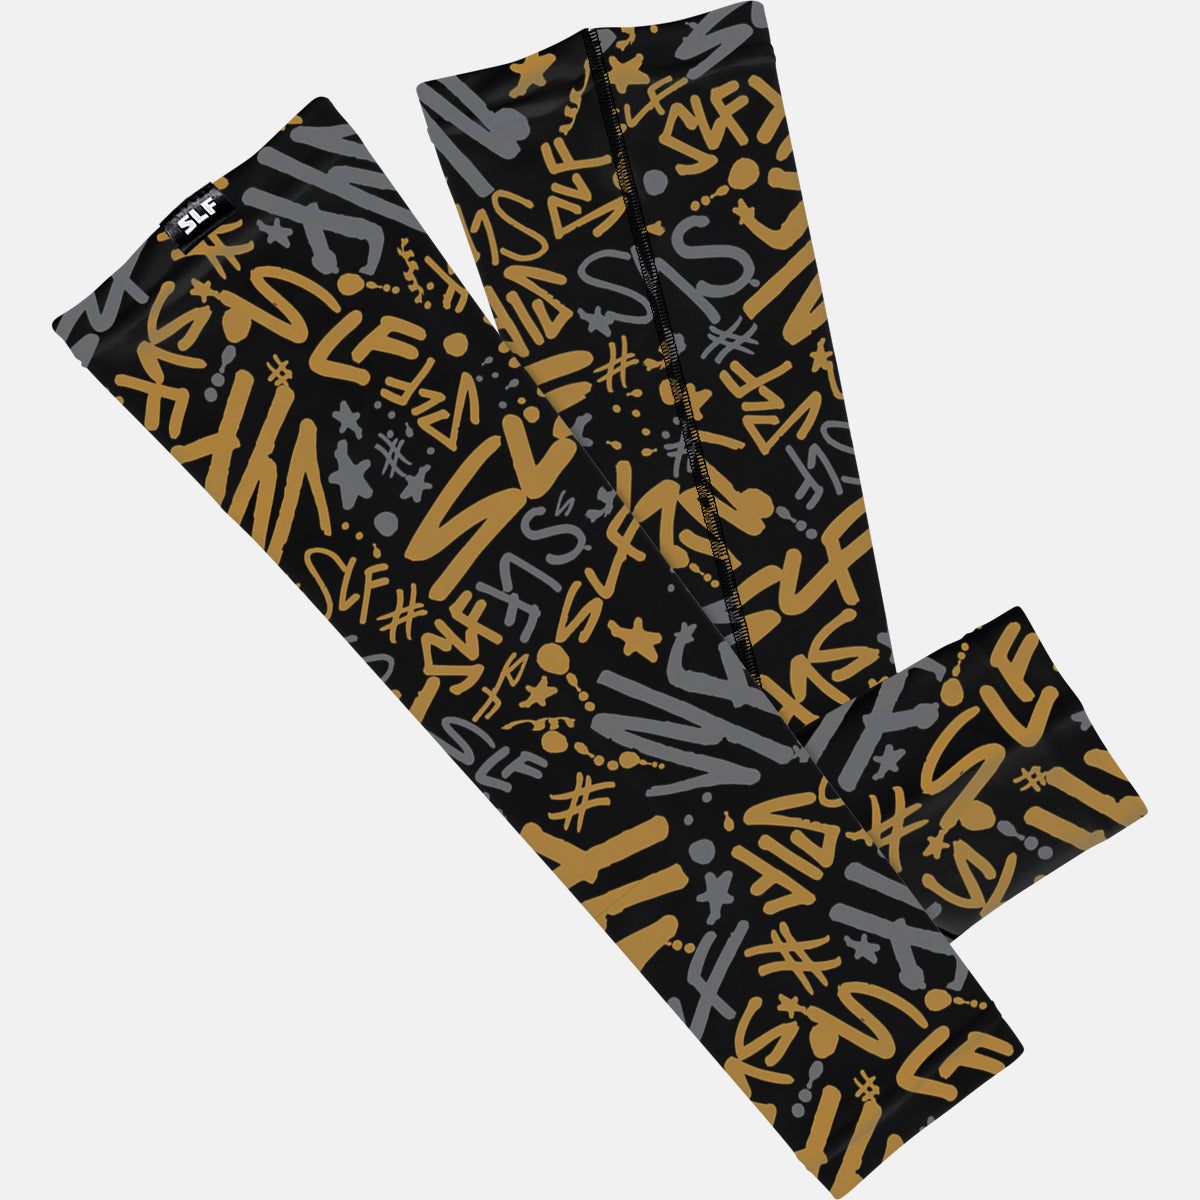 SLF Pattern Black Gold Arm Sleeve